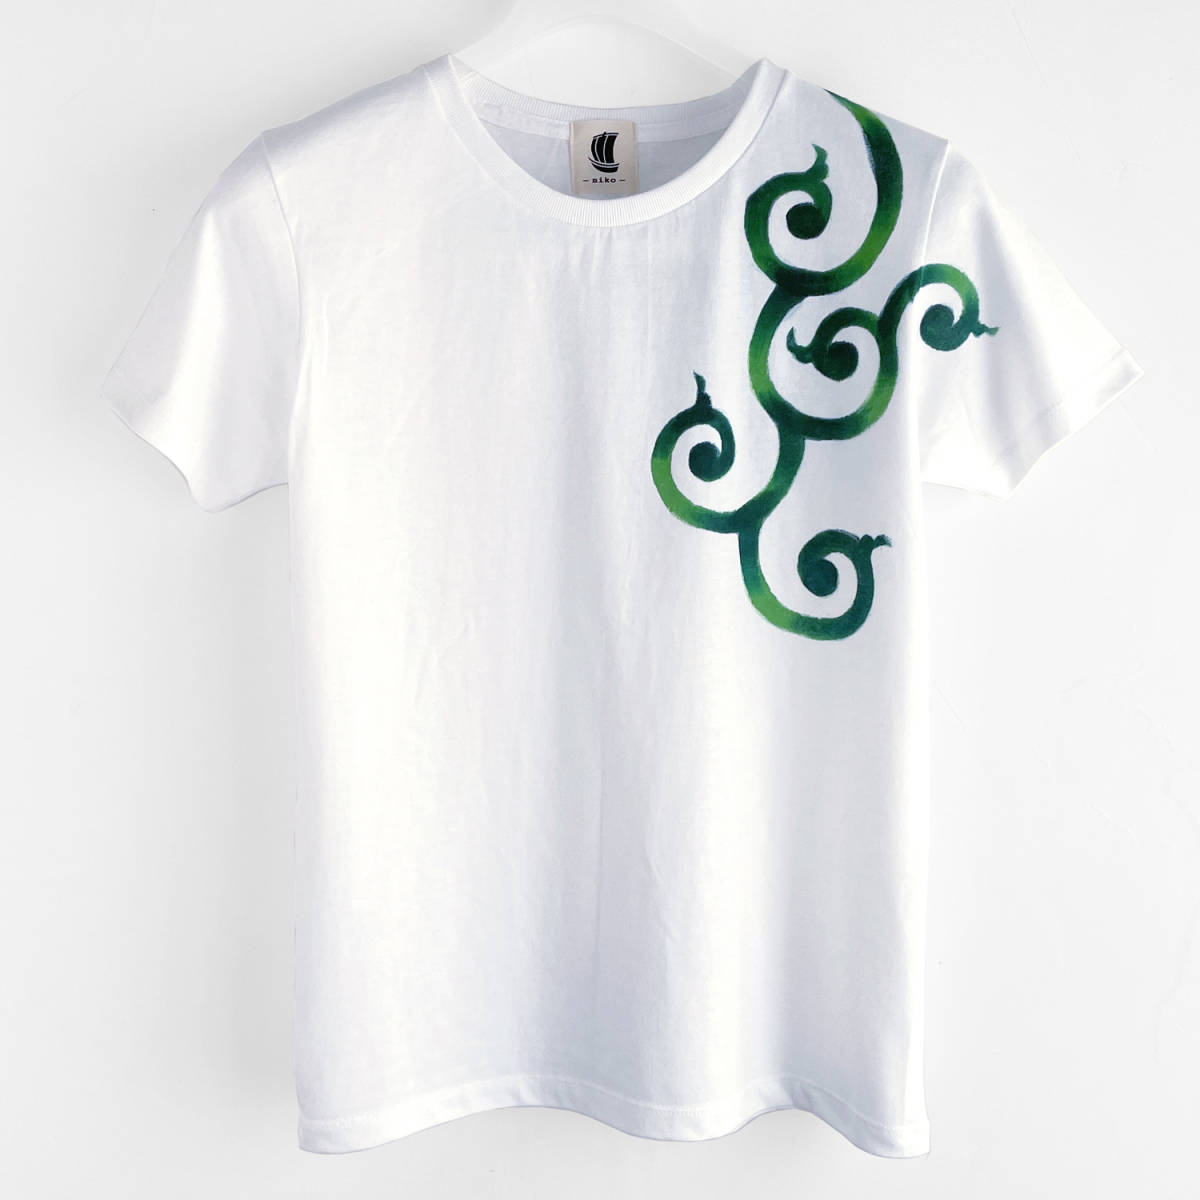 Женская футболка размера M. Зеленая футболка с арабесковым узором. Белая футболка ручной работы с ручной росписью., Размер М, круглая шея, узорчатый